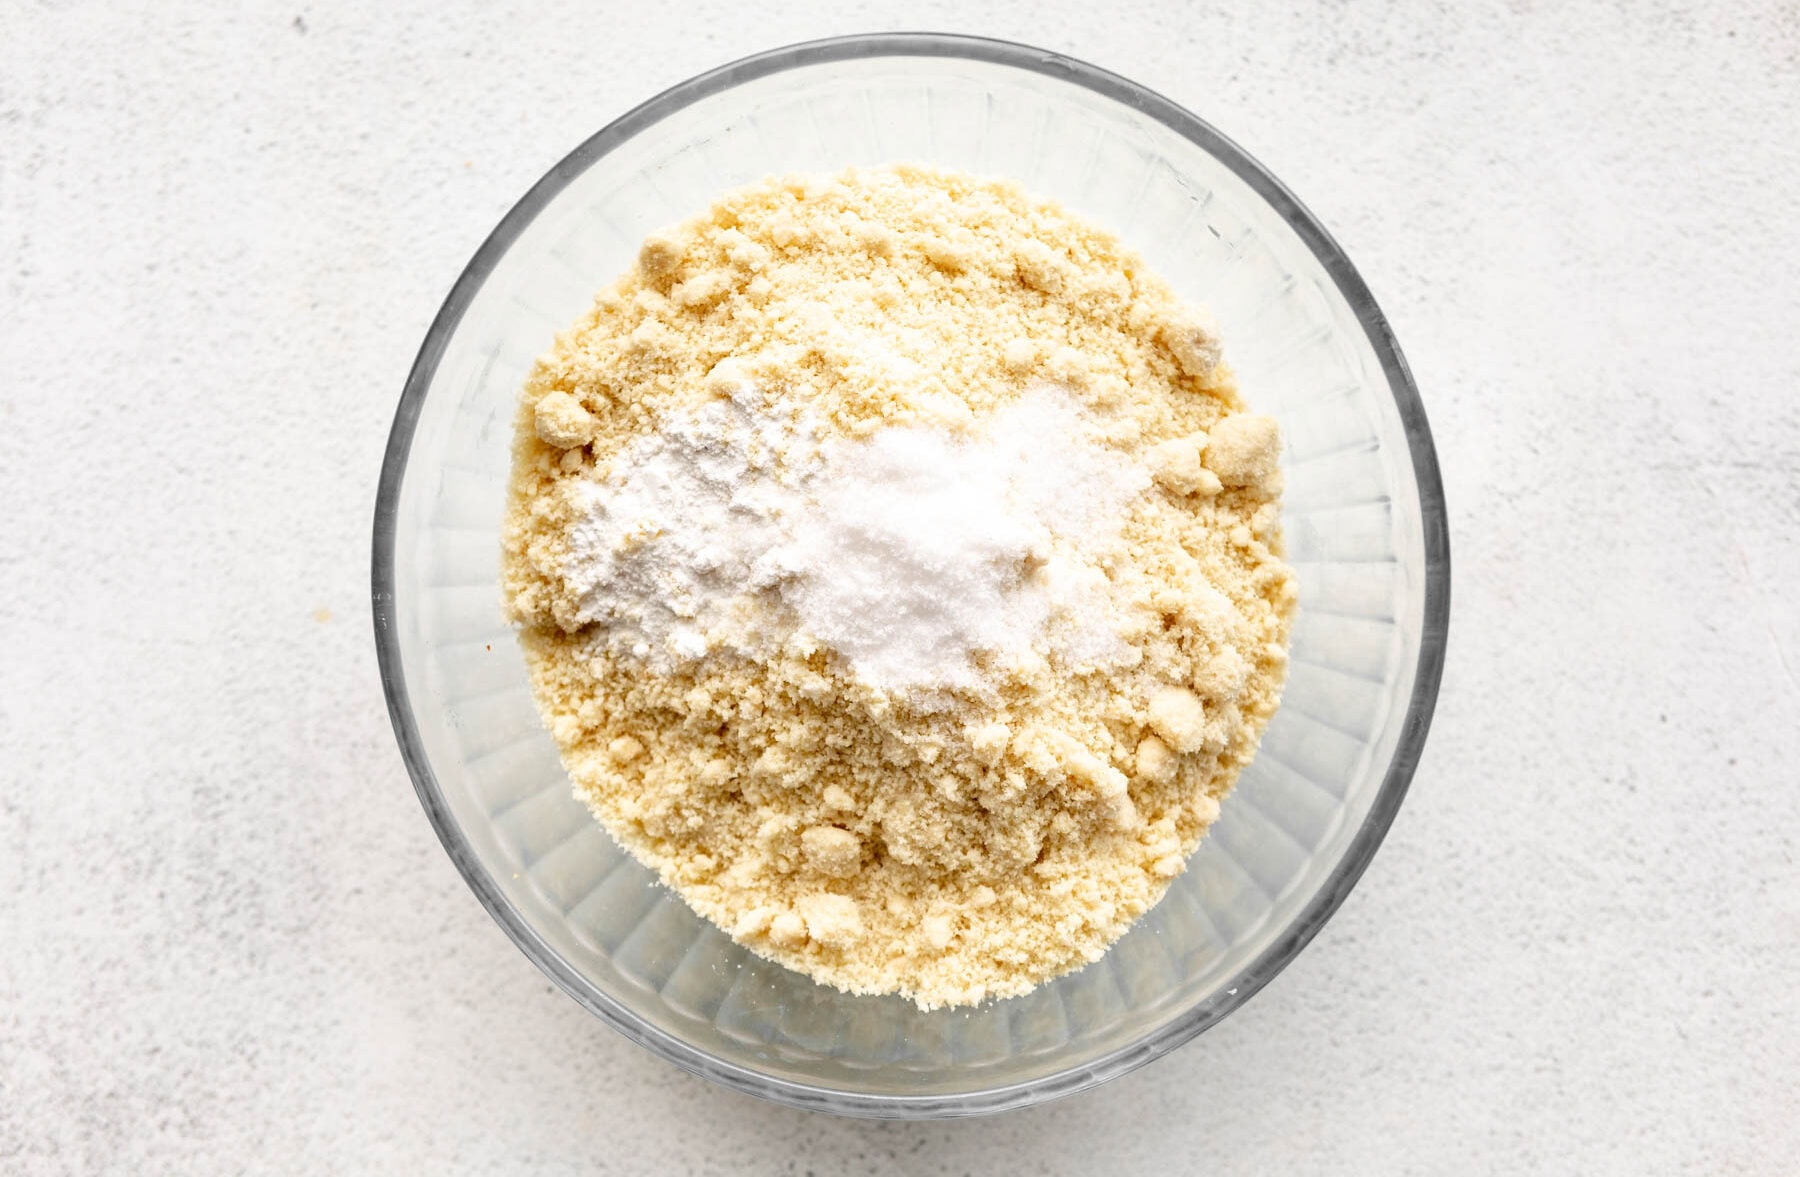 almond flour, baking soda, baking powder, and salt in a glass bowl.